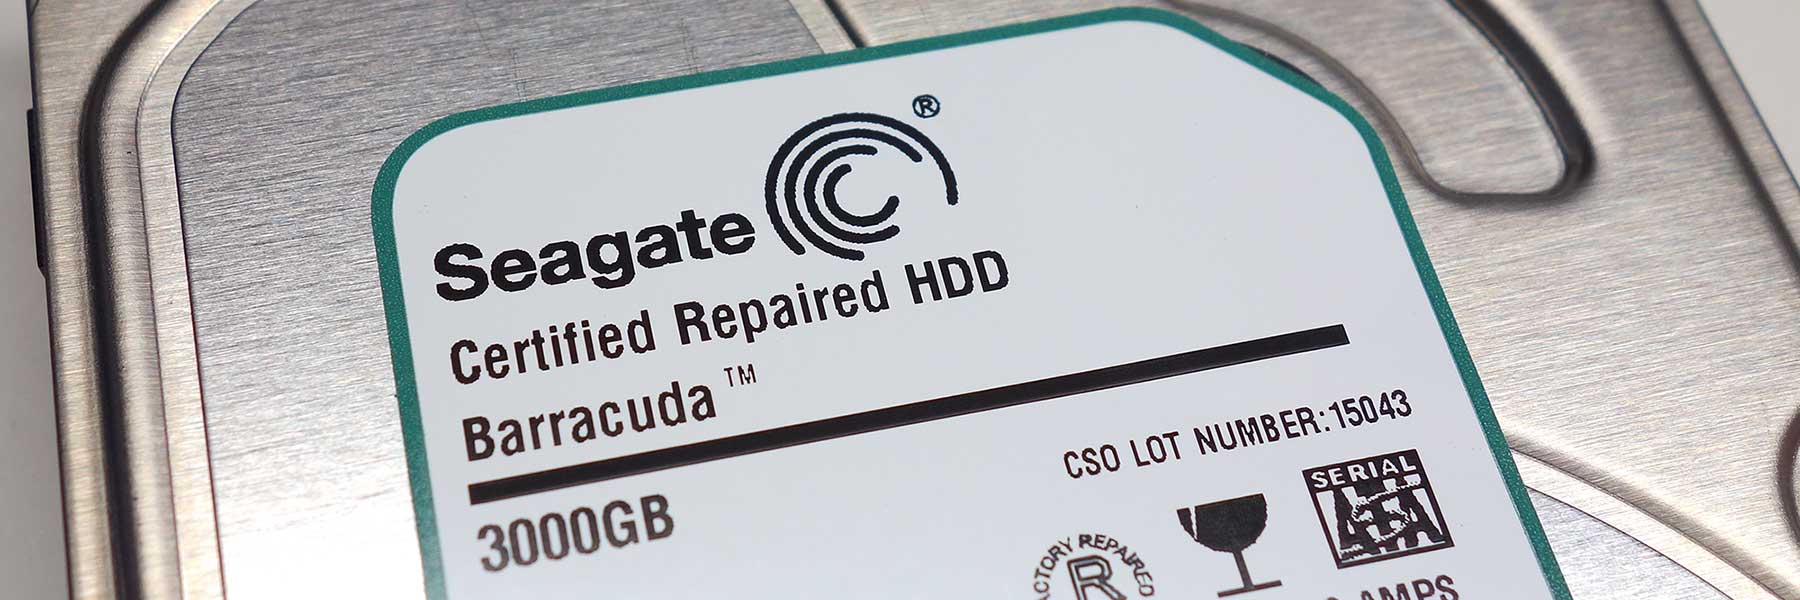 Seagate HDD RMA